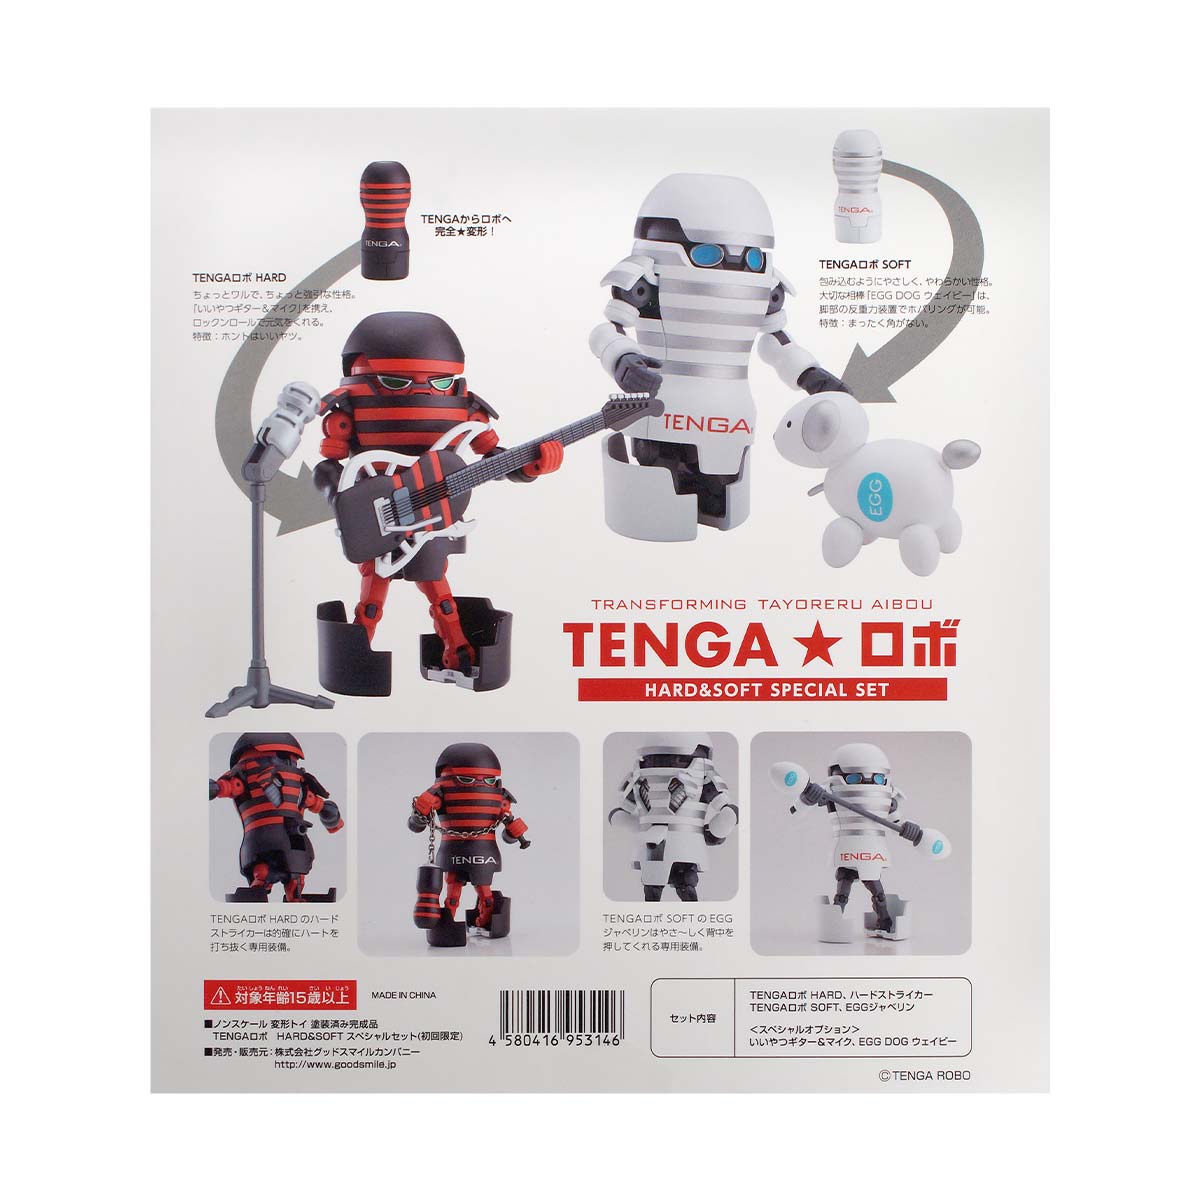 TENGA ROBO HARD & SOFT Special Set (Limited Edition)-p_3